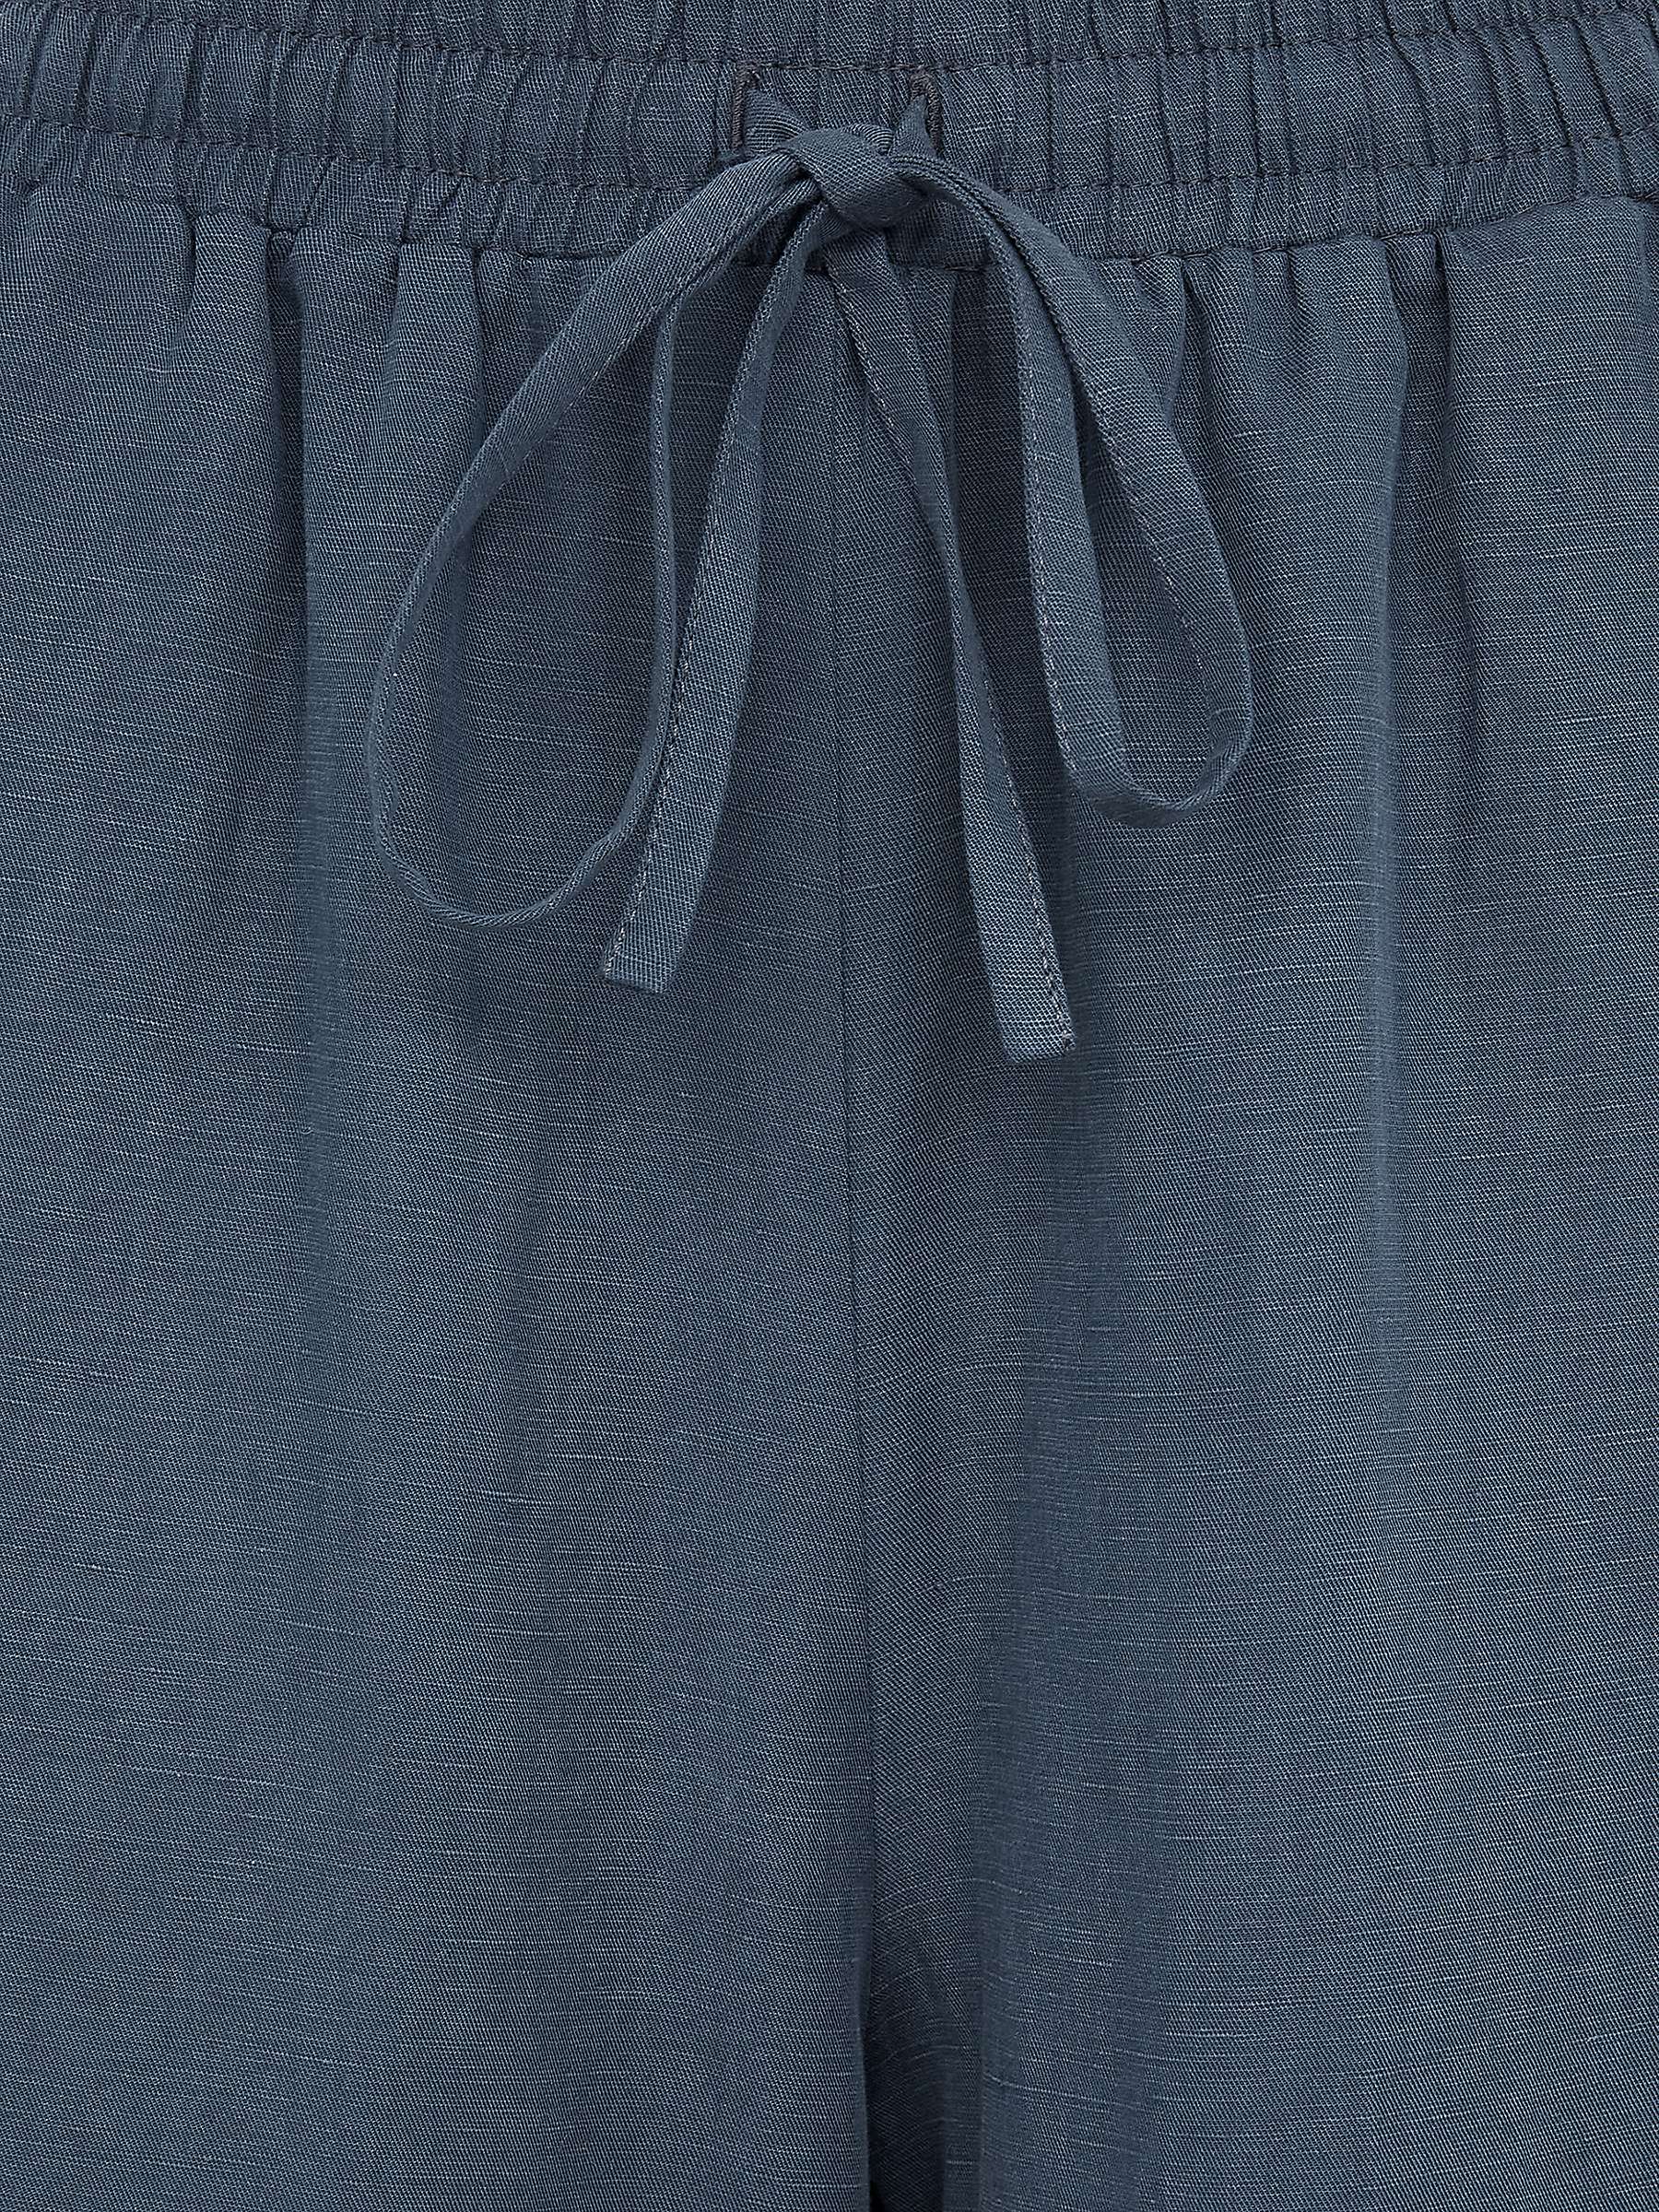 Buy Celtic & Co. Plain Cropped Linen Blend Trousers, Navy Online at johnlewis.com